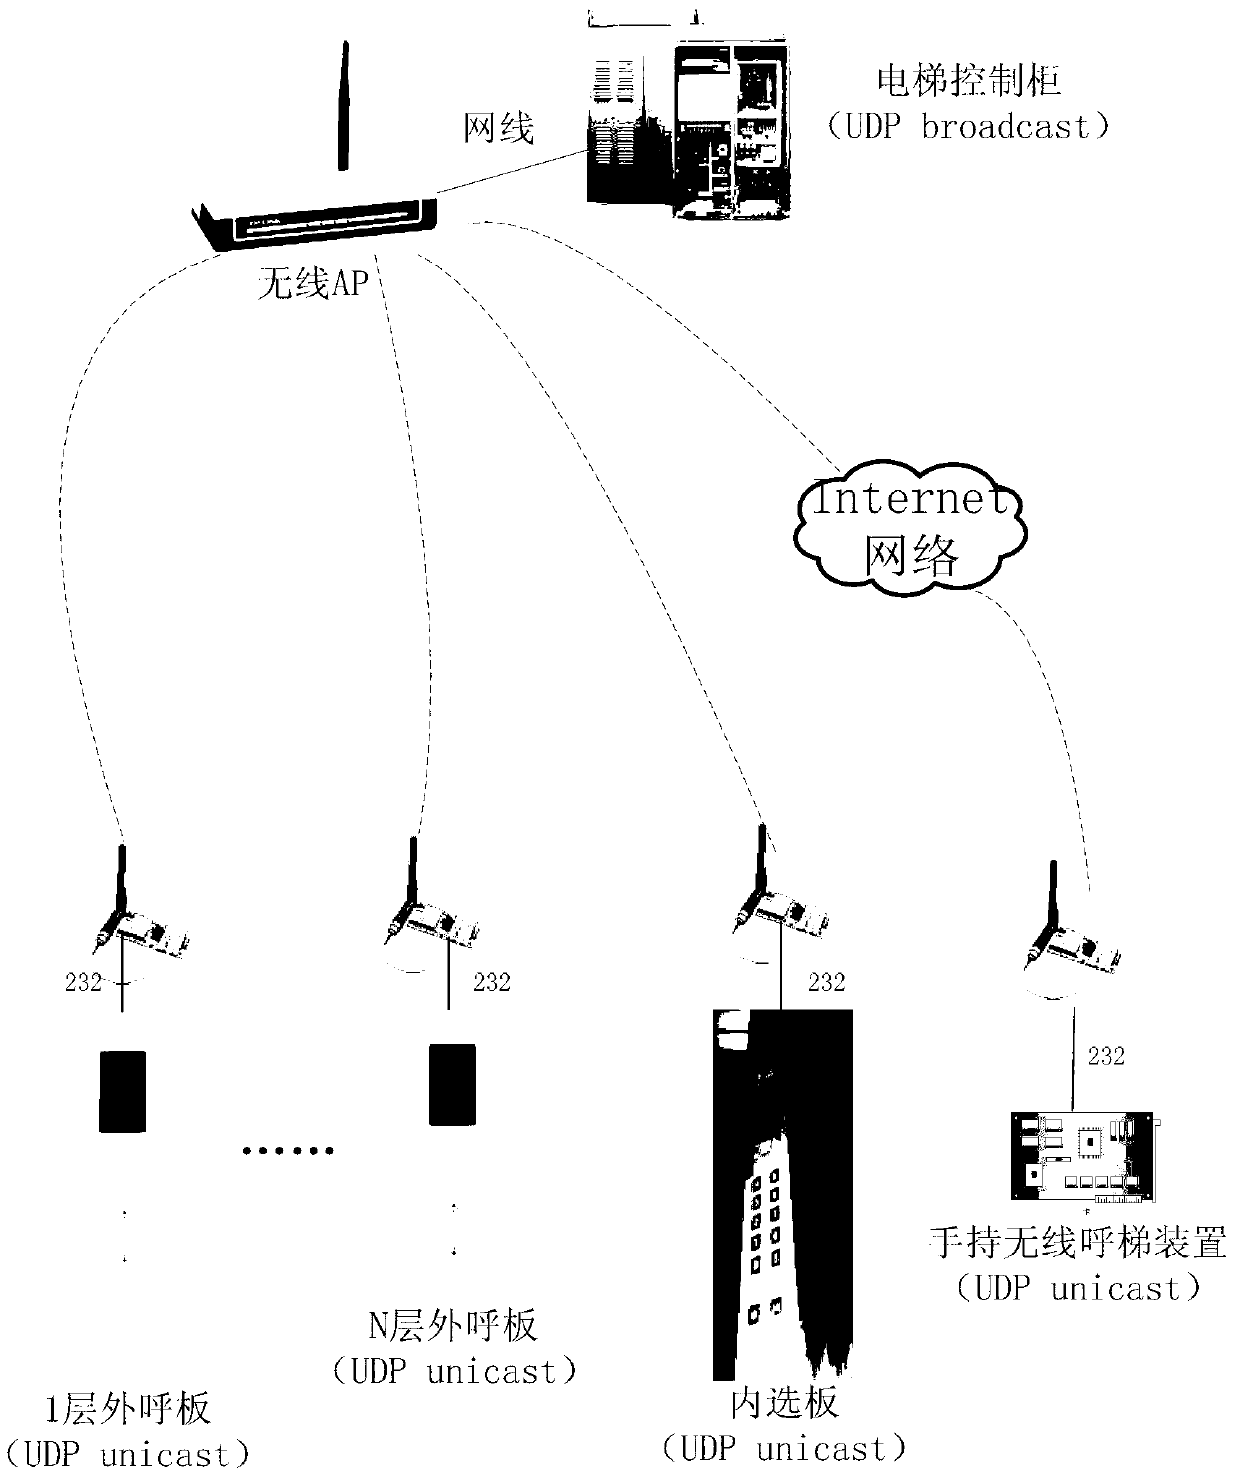 Elevator calling system based on Wi-Fi (wireless fidelity) wireless network